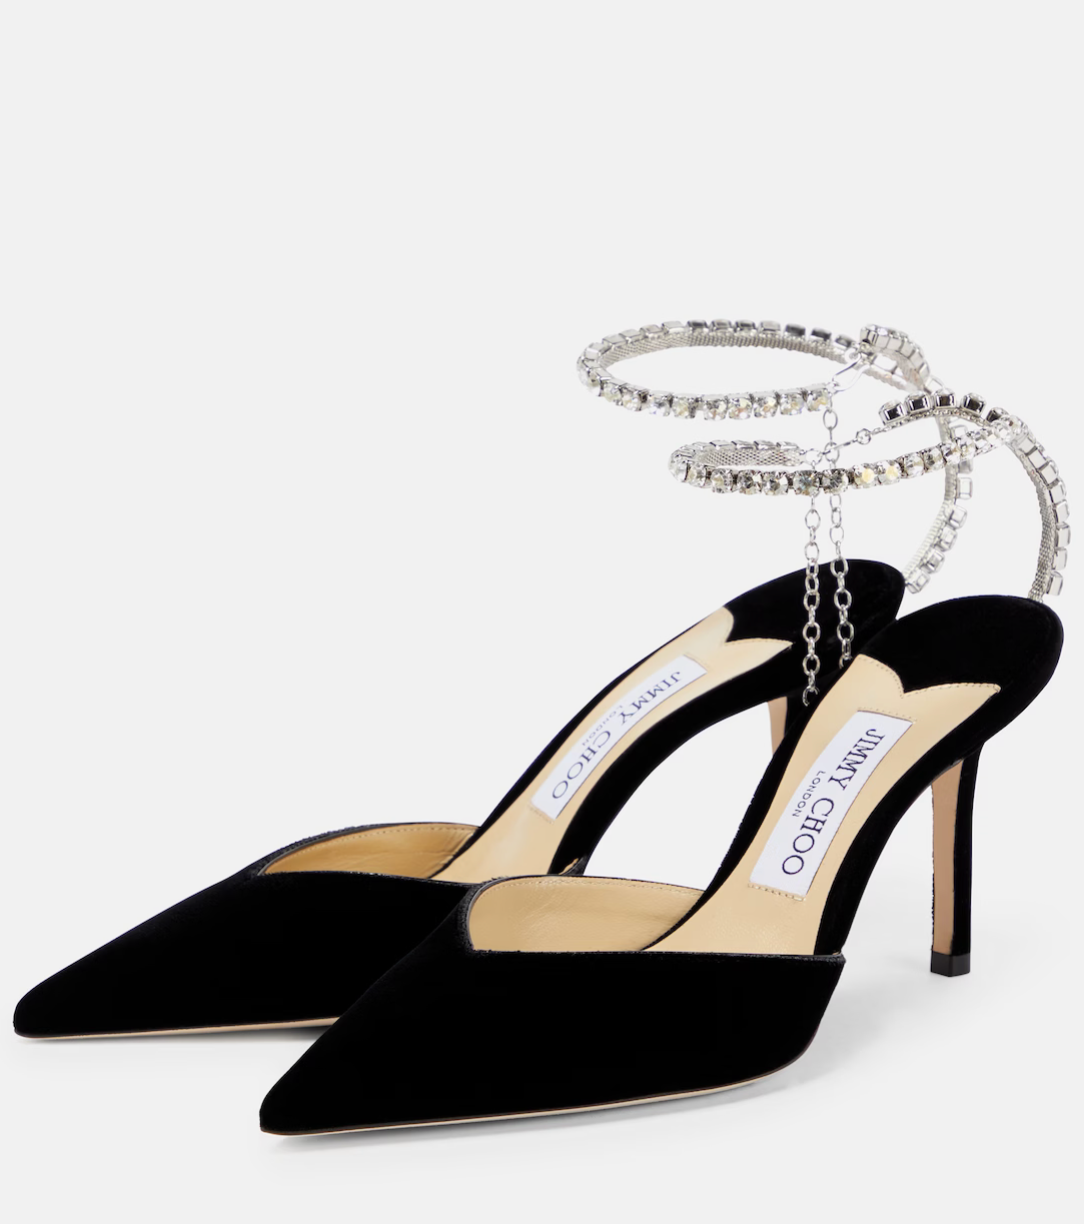 Jimmy Choo Saeda Suede Black Heels With Crystals Size 37 Retail Price - 925€